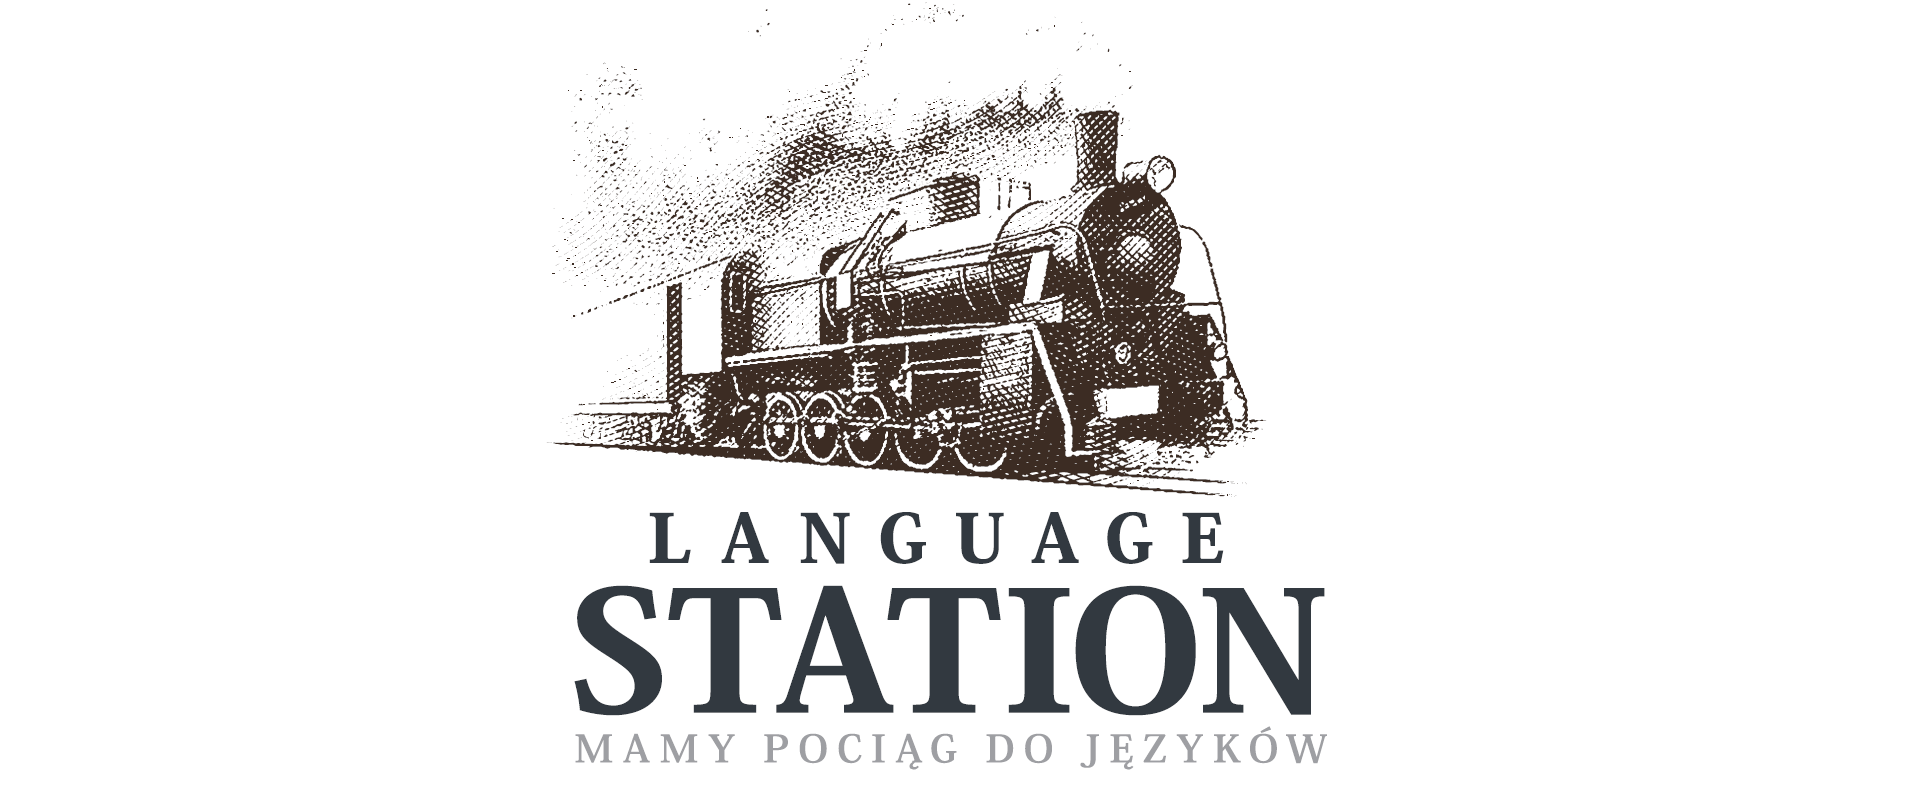 Language Station